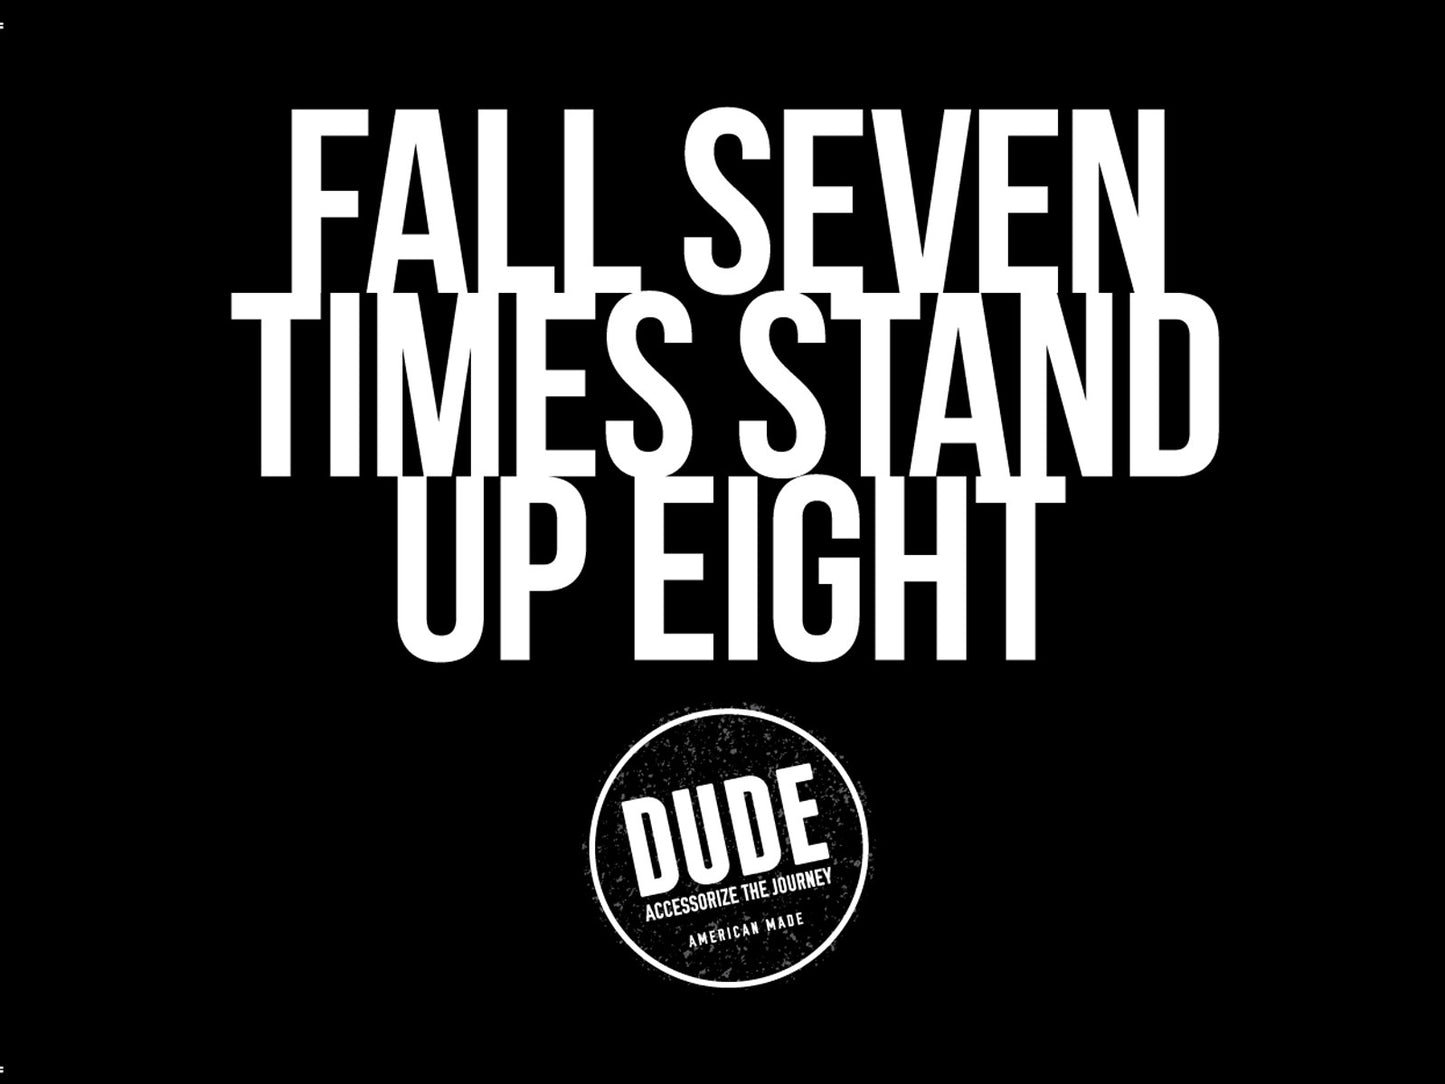 Fall Seven Times, Stand Up Eight DUDE Cuff Bracelet backer card